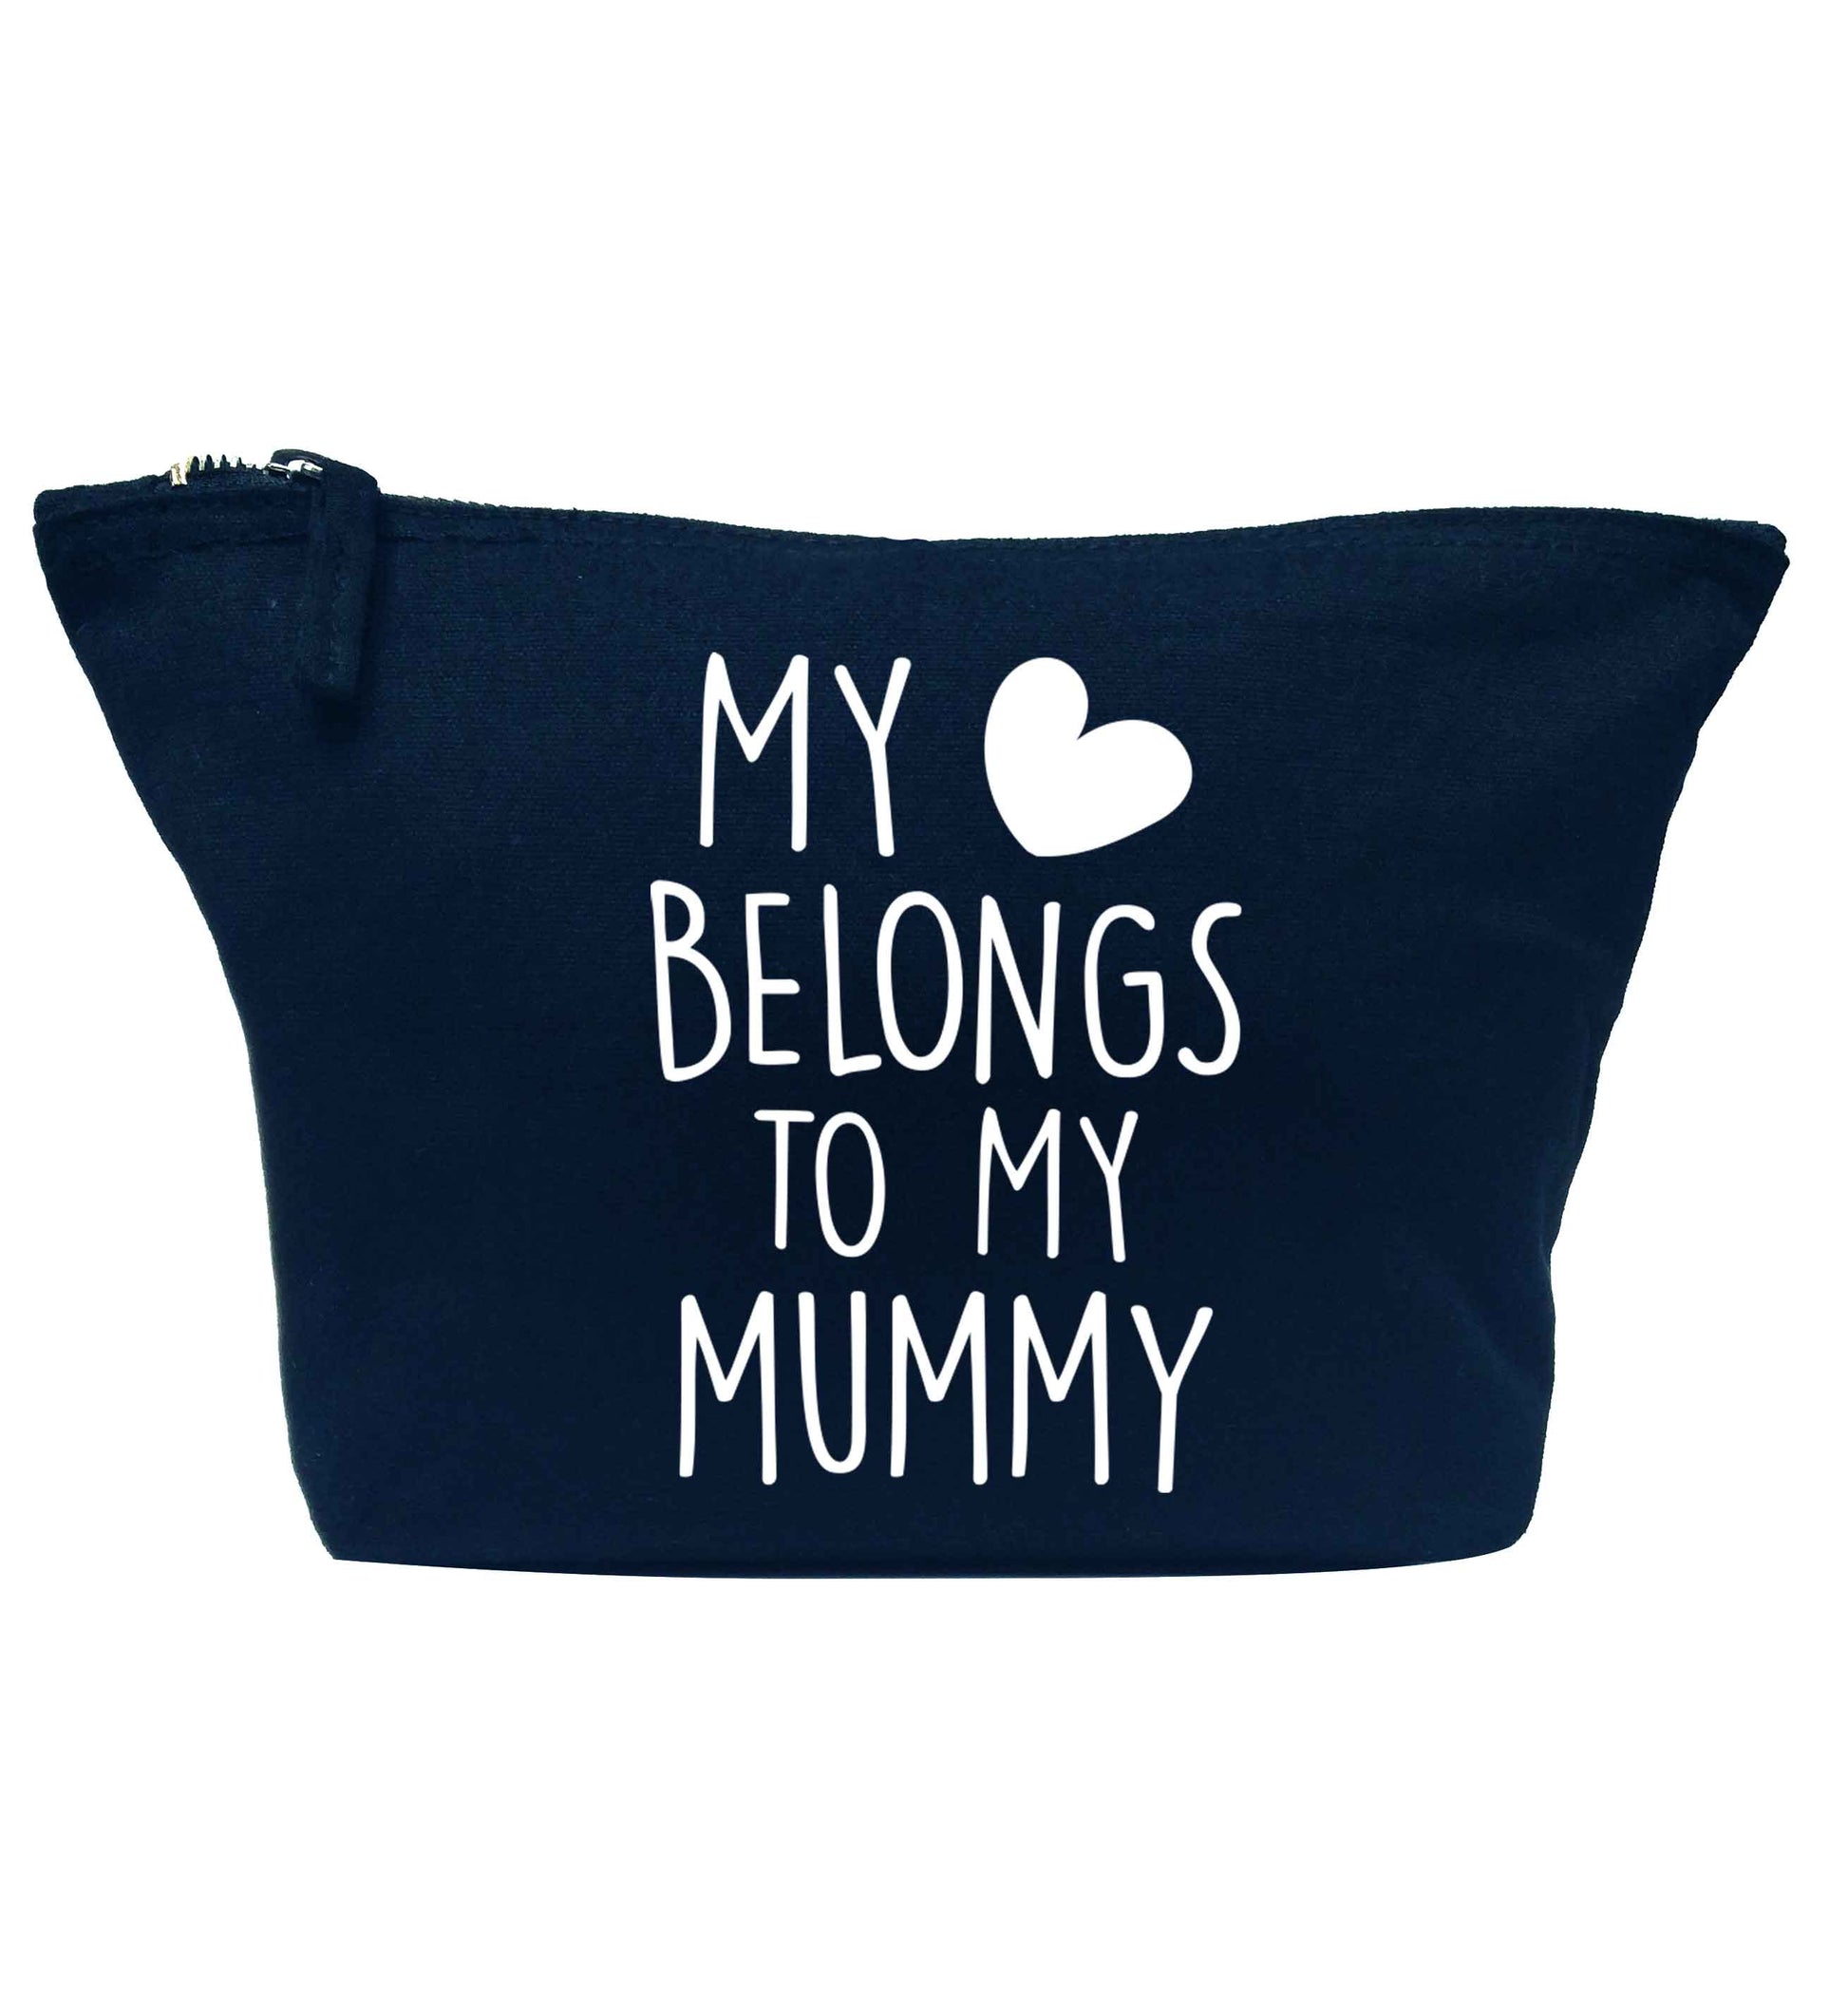 My heart belongs to my mummy navy makeup bag